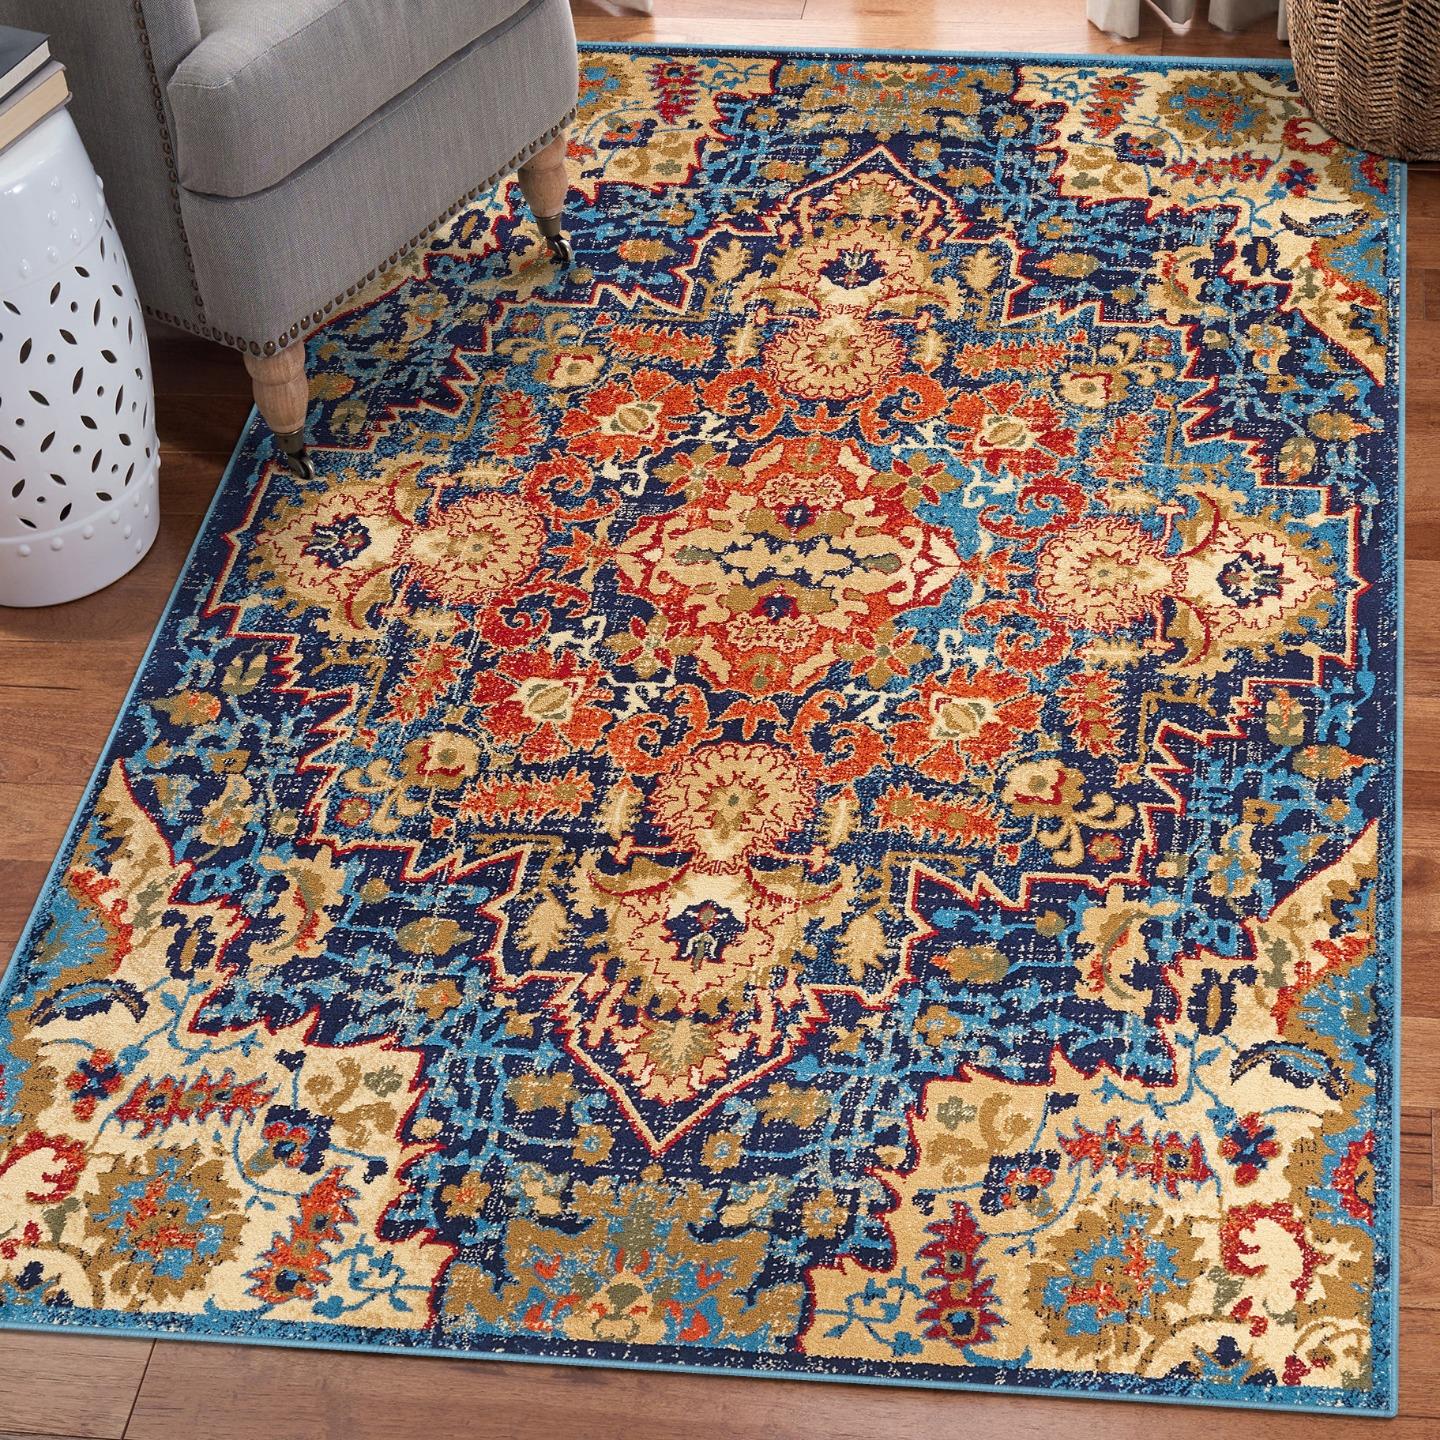 Luxe Weavers Oriental Blue 8x10 Vintage Area Rug, Southwestern Geometric Carpet - image 1 of 6